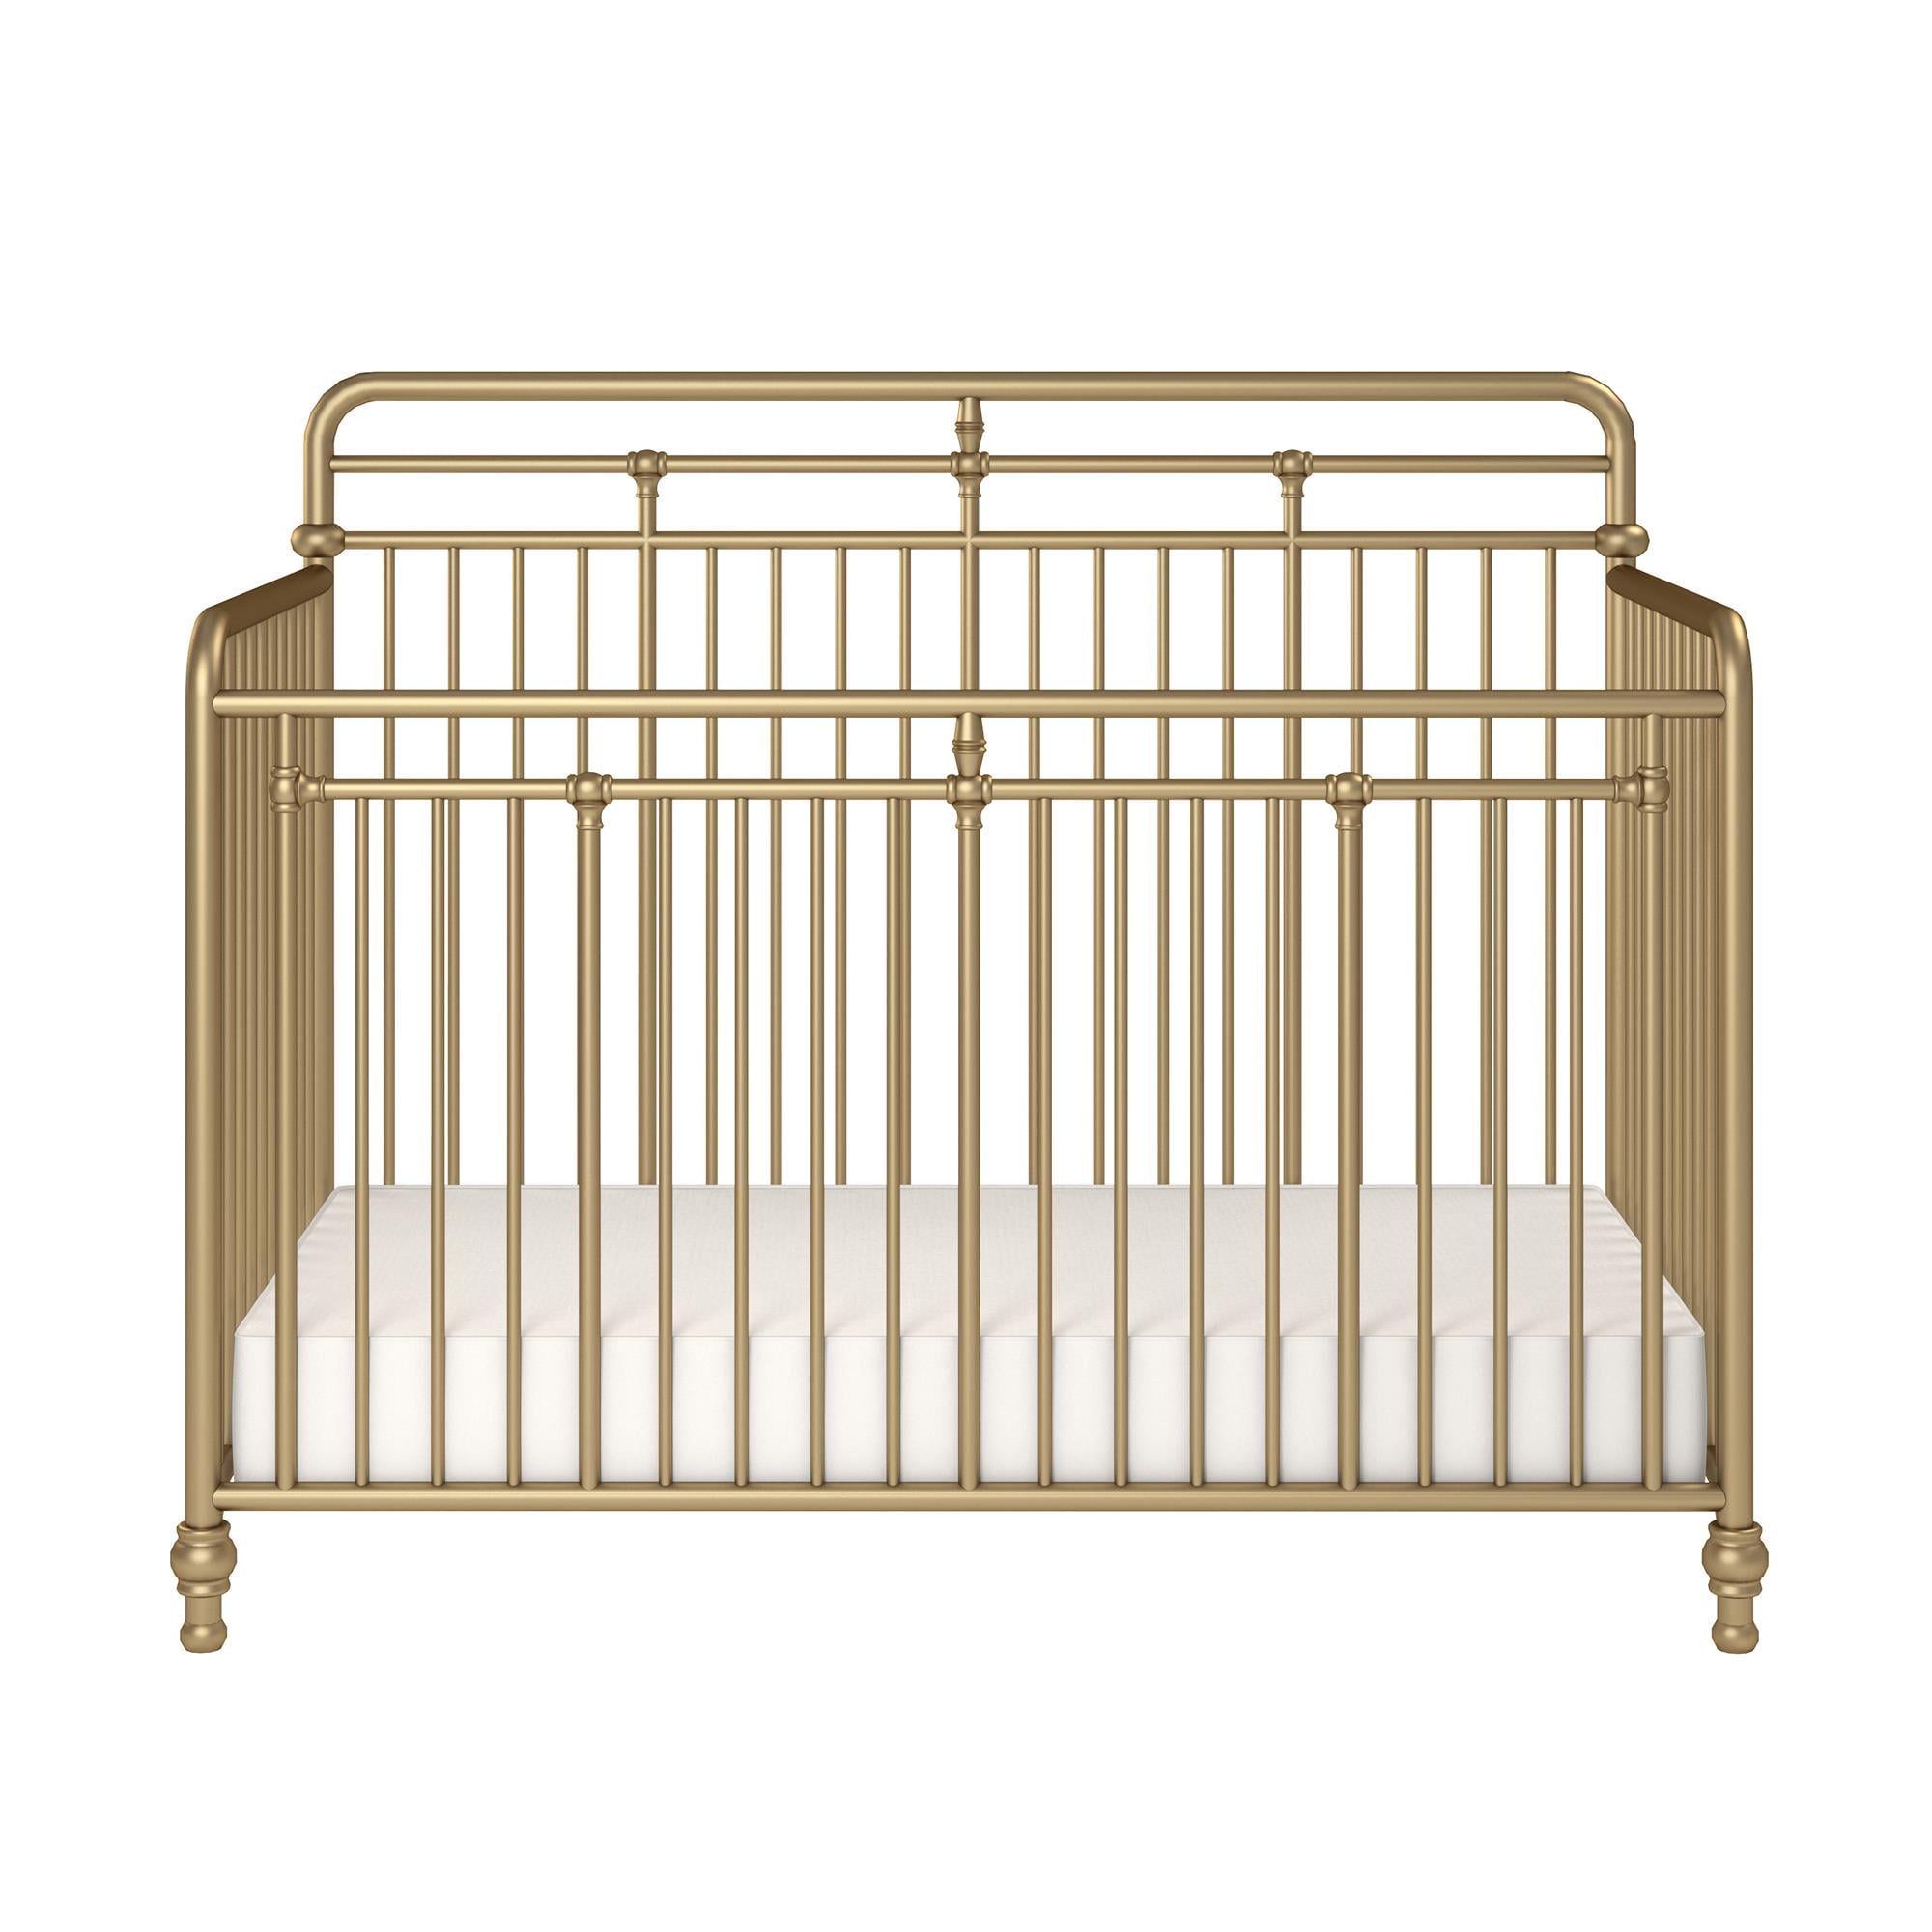 baby crib gold